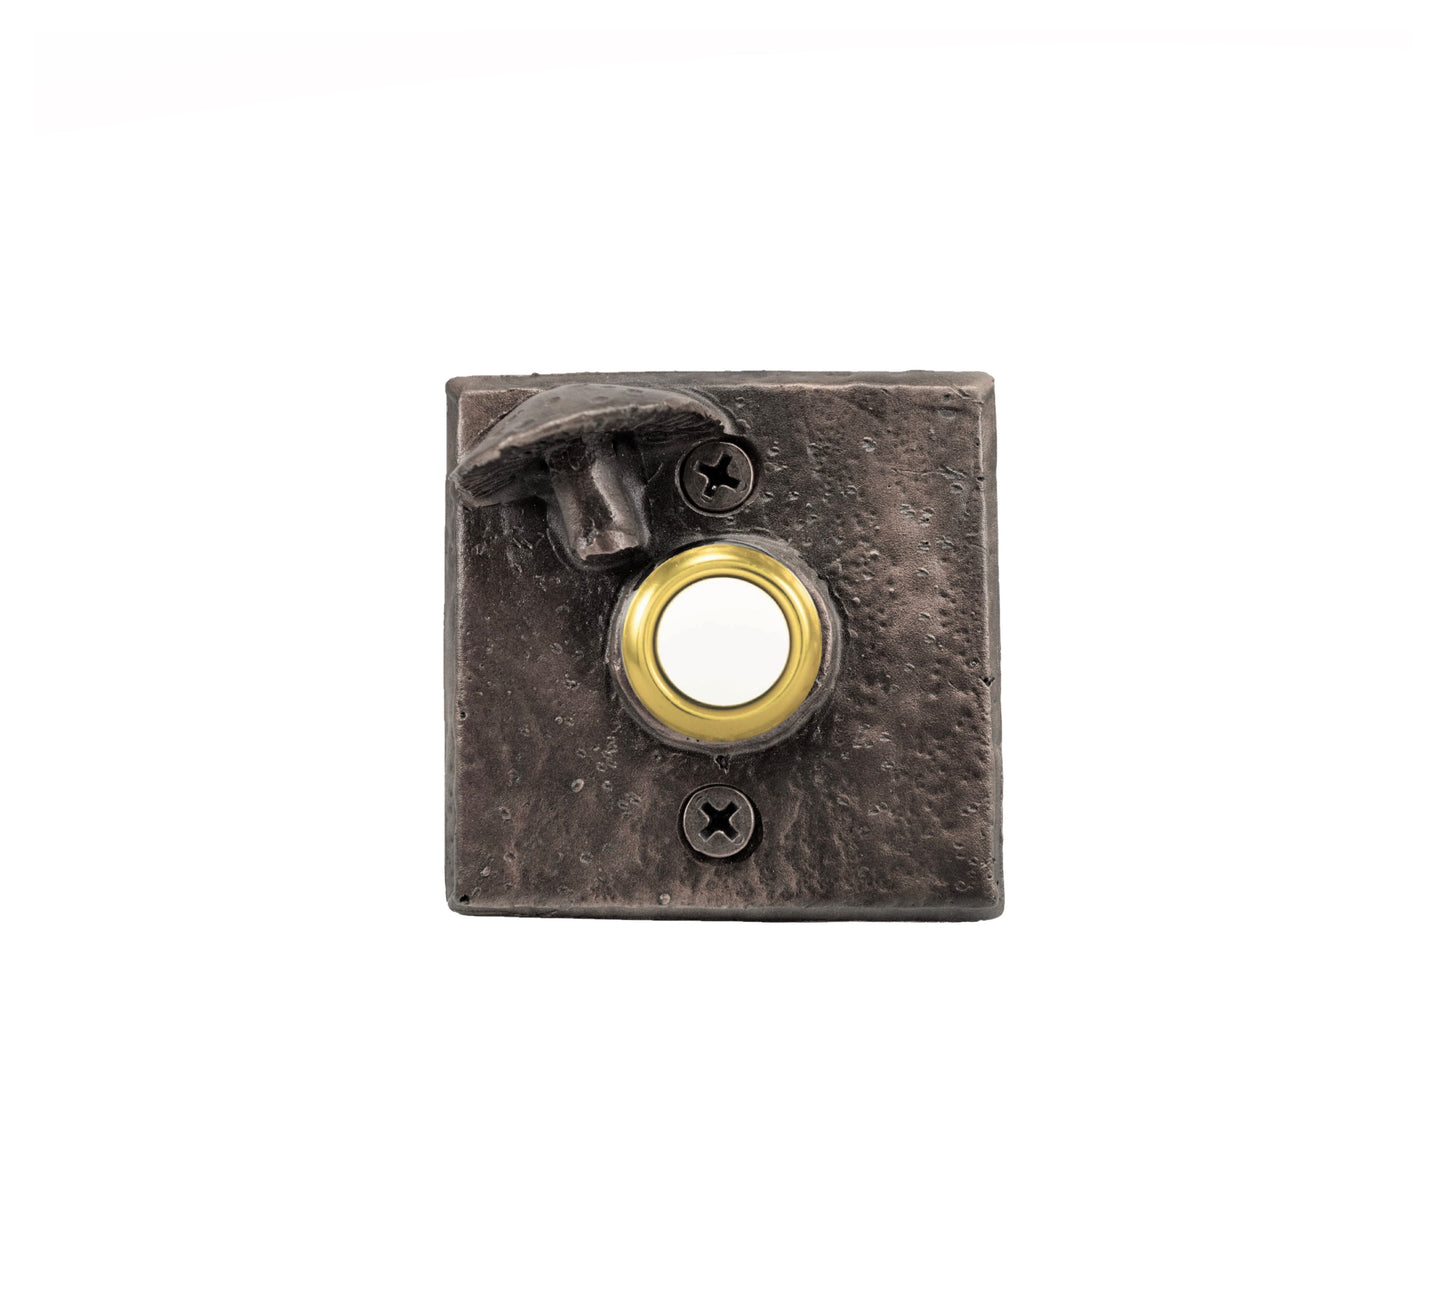 Sqaure toadstool mushroom doorbell made of bronze